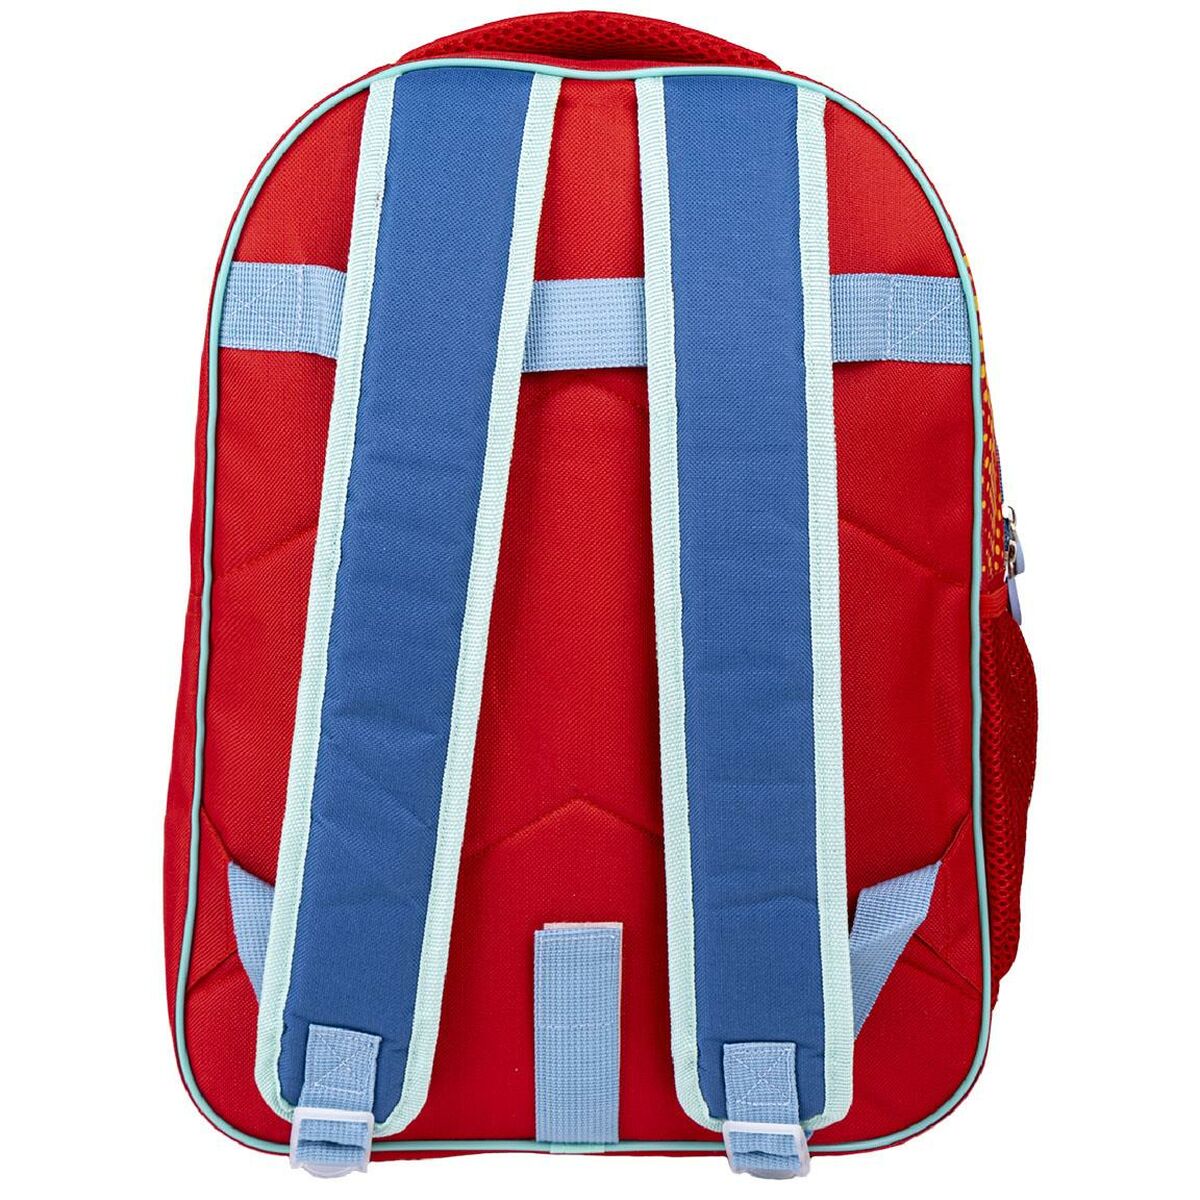 School Bag Spiderman Red Blue-7